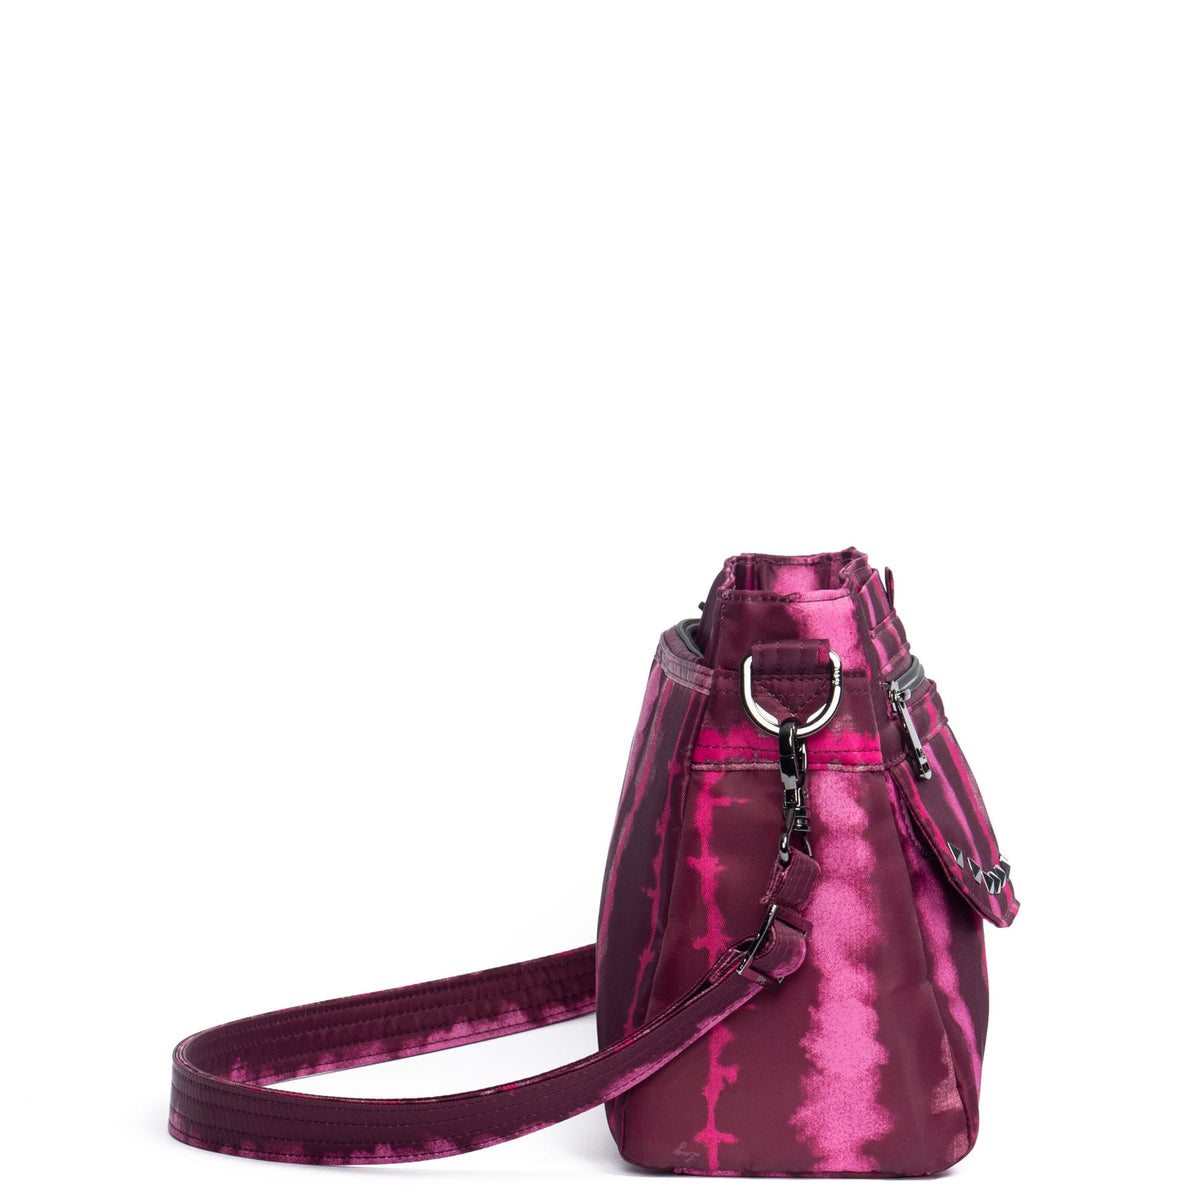 3.0] Pink Plaid Crossbody Bag